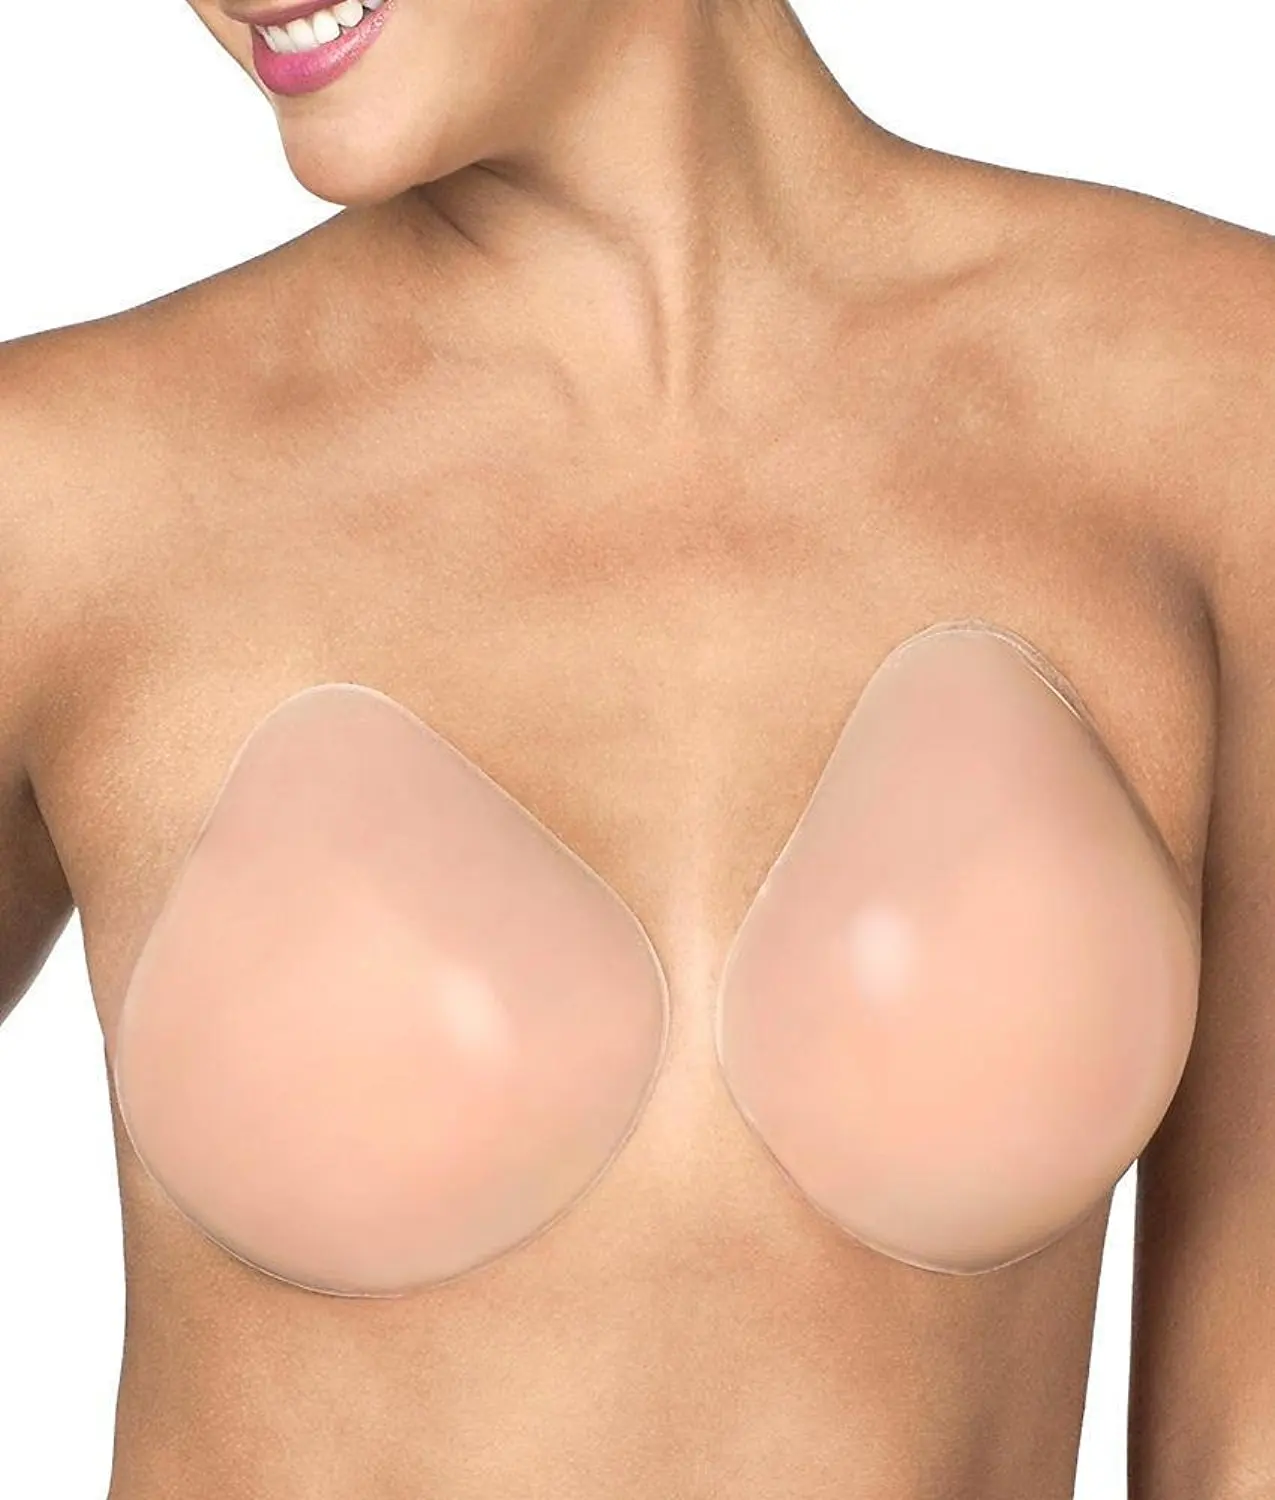 чашечки на женской груди фото 108